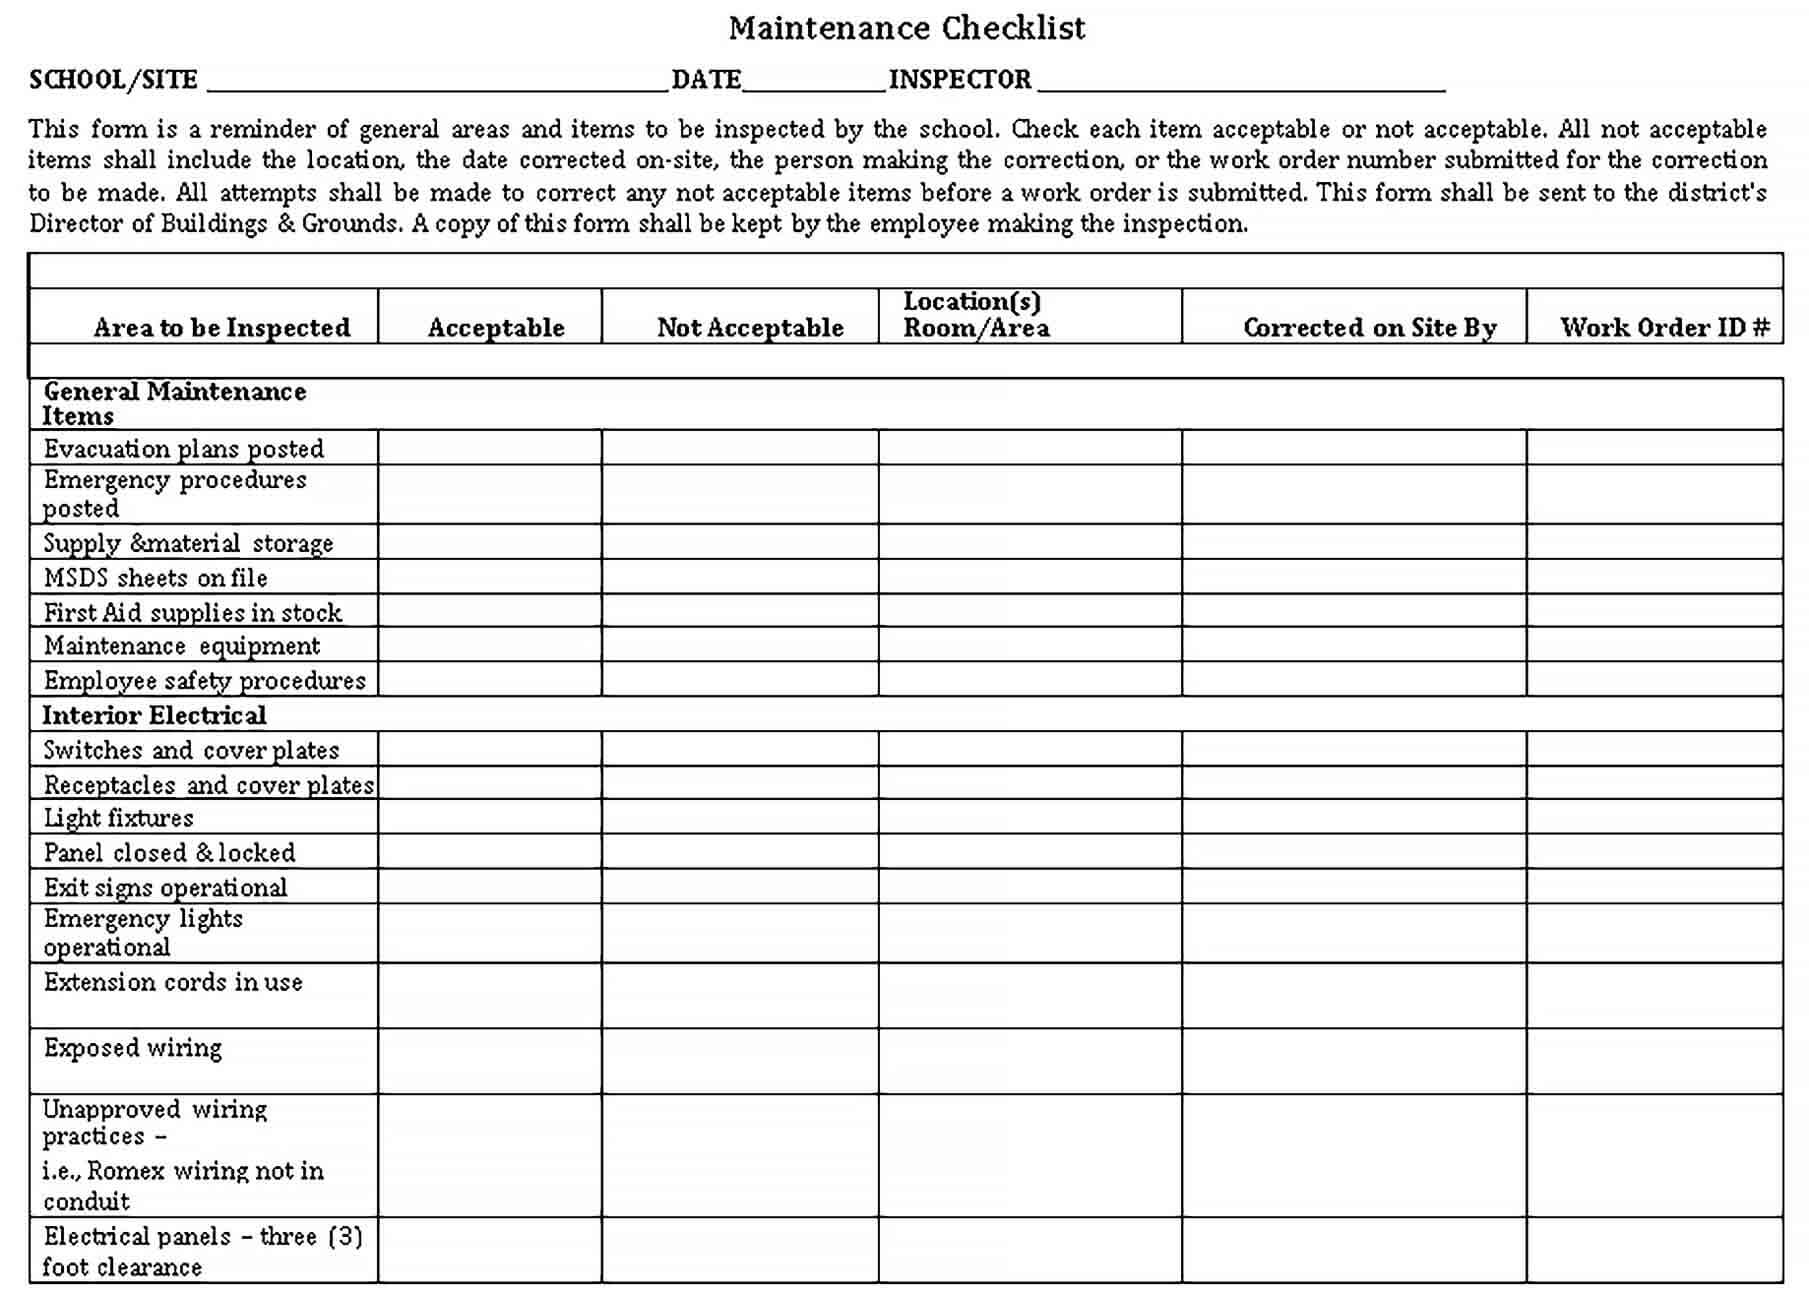 Sample School Maintenance Checklist Example